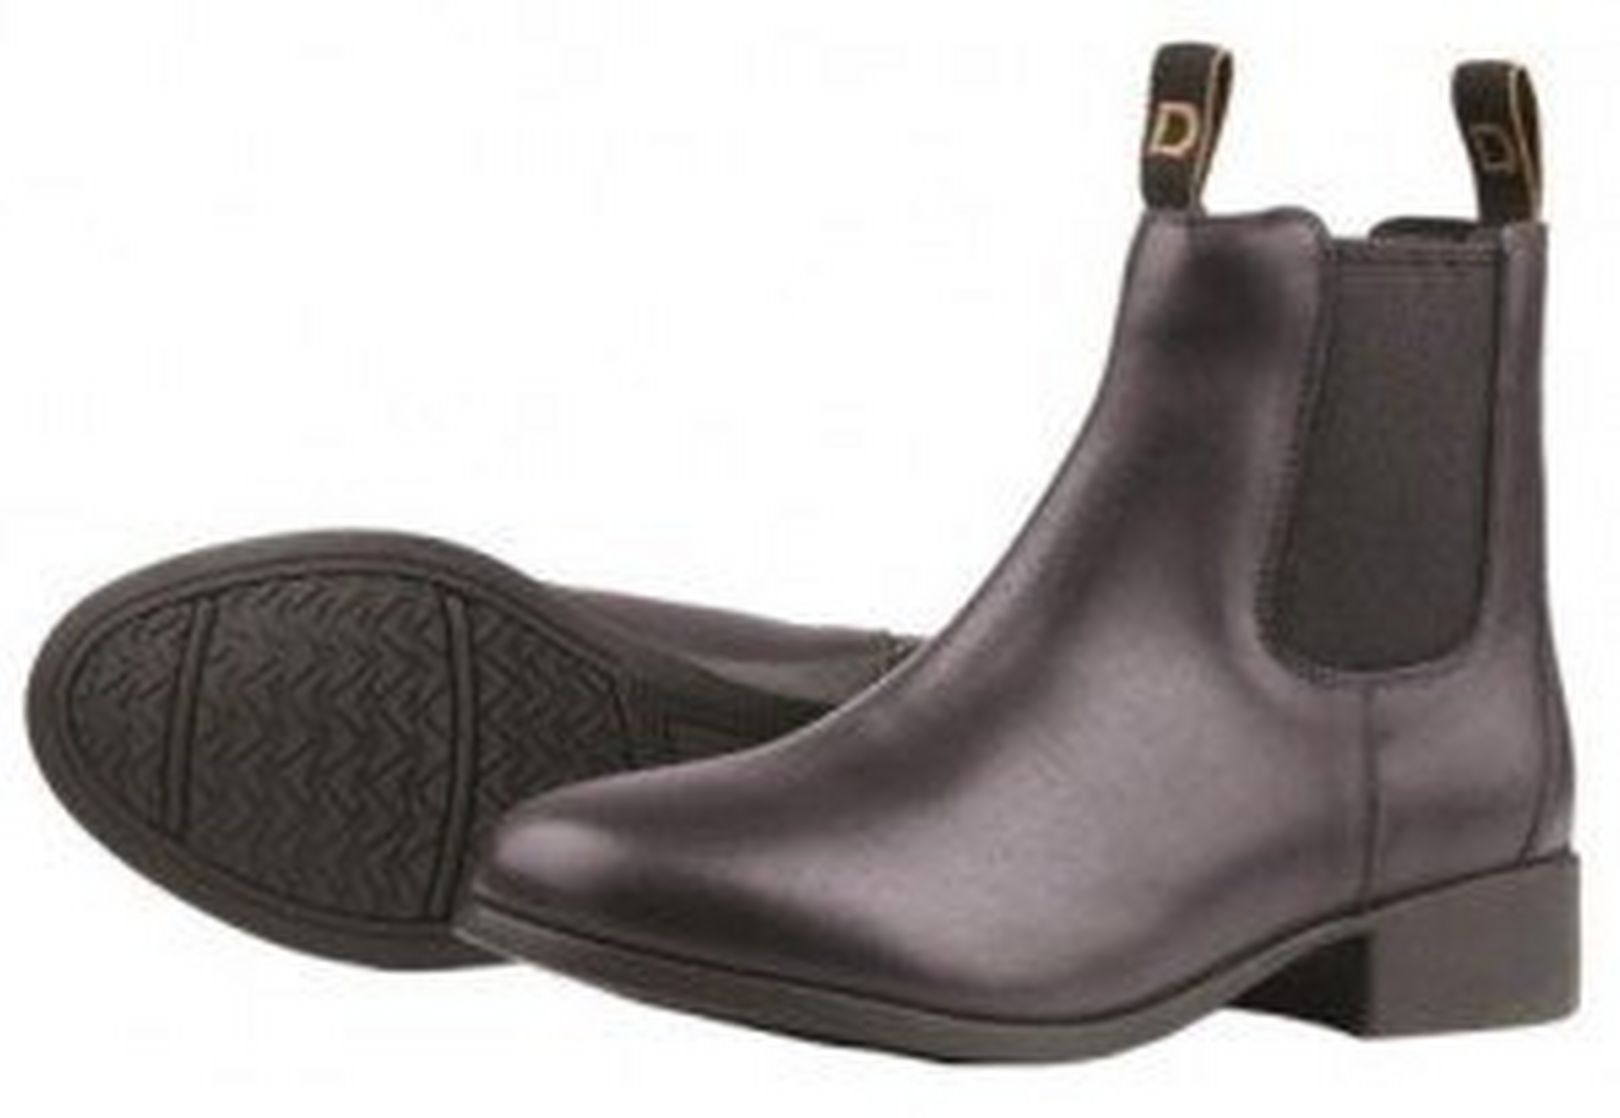 Introducing the New Dublin Jodhpur Boots | Naylors Blog | Naylors